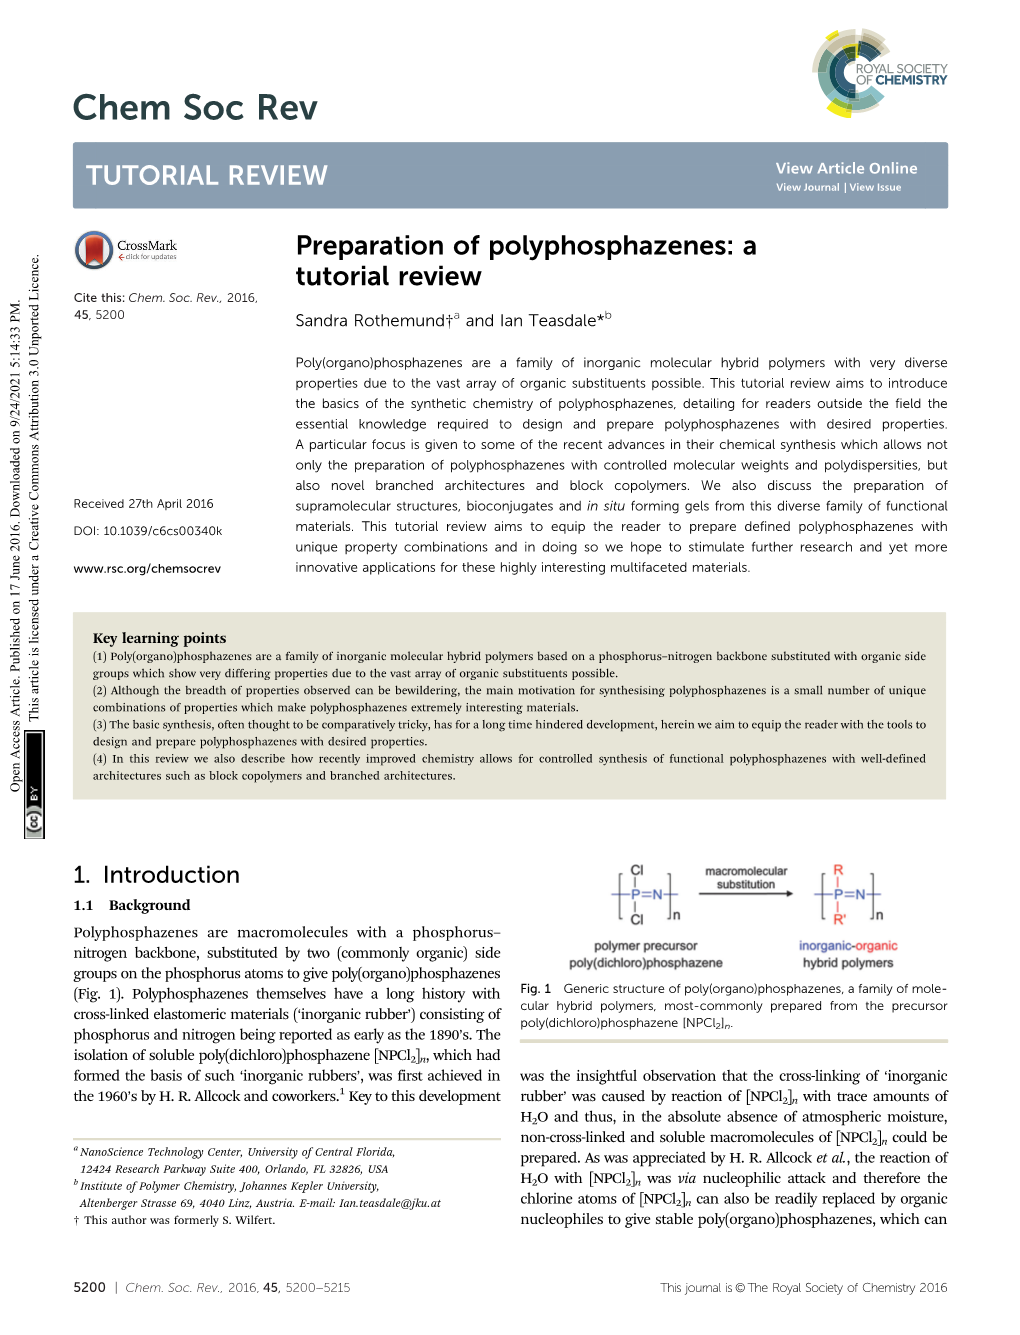 Preparation of Polyphosphazenes: a Tutorial Review Cite This: Chem